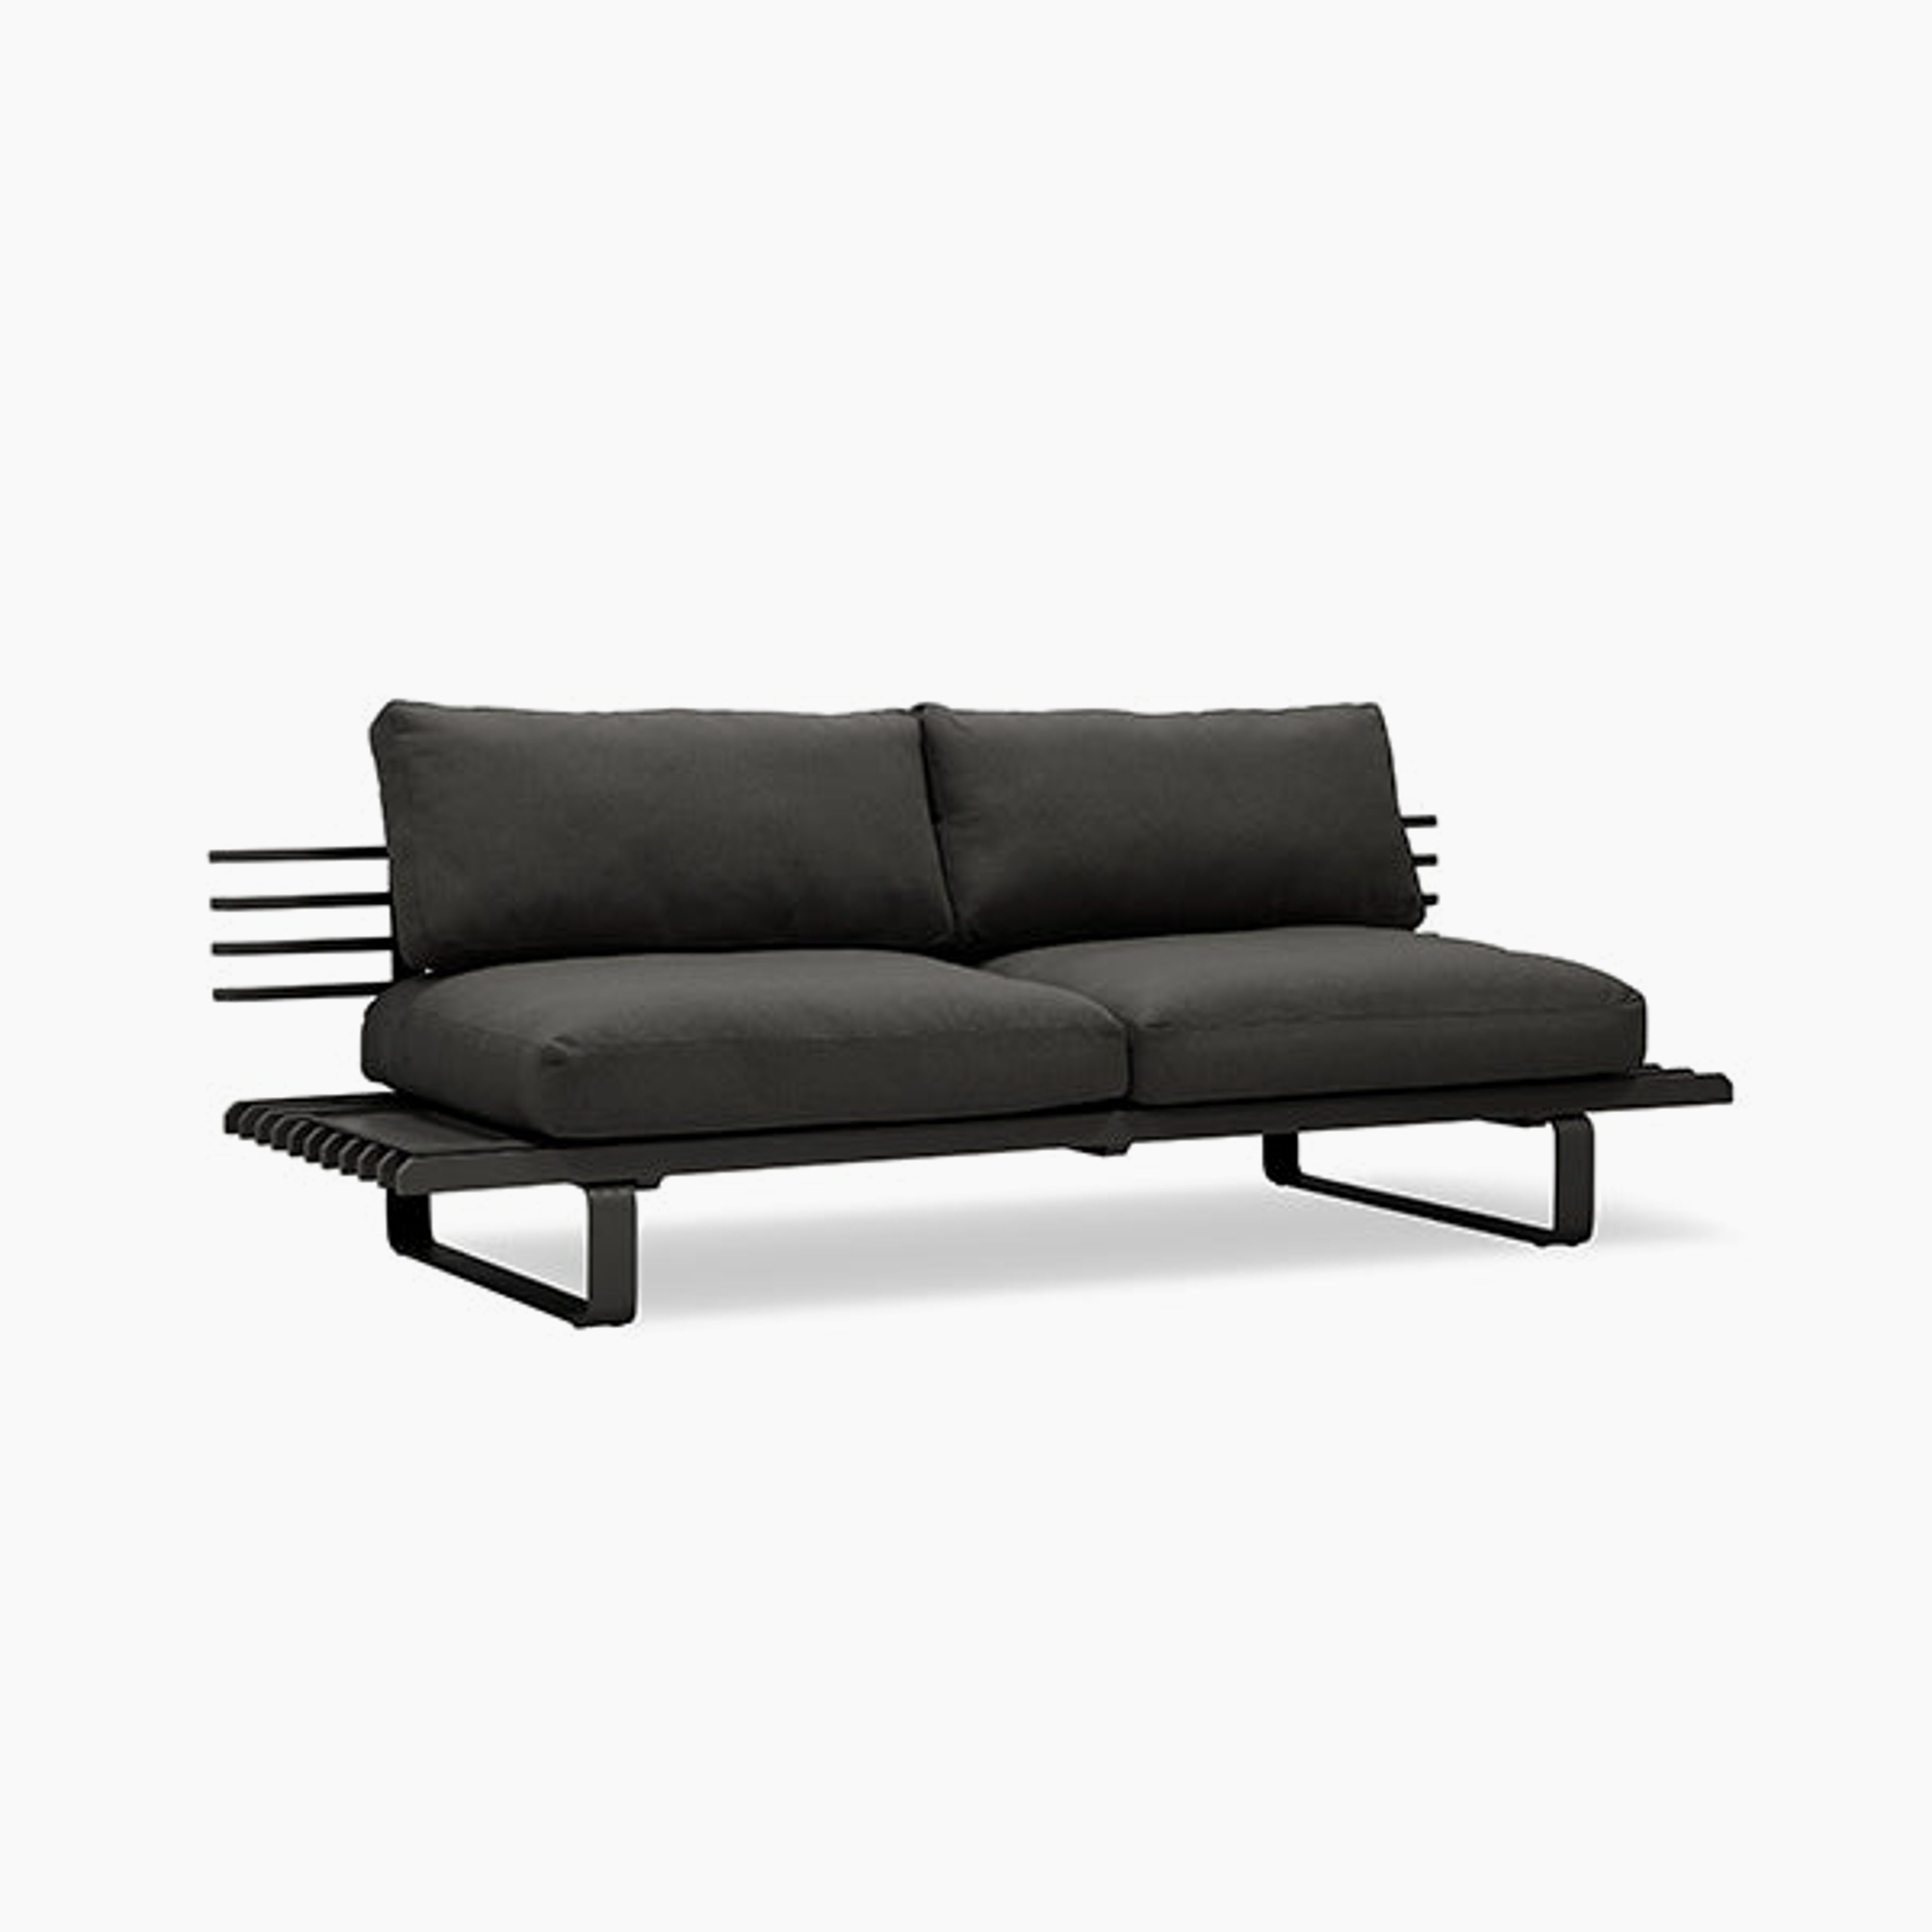 Aluminum outdoor sofa Charcoal / black pillows